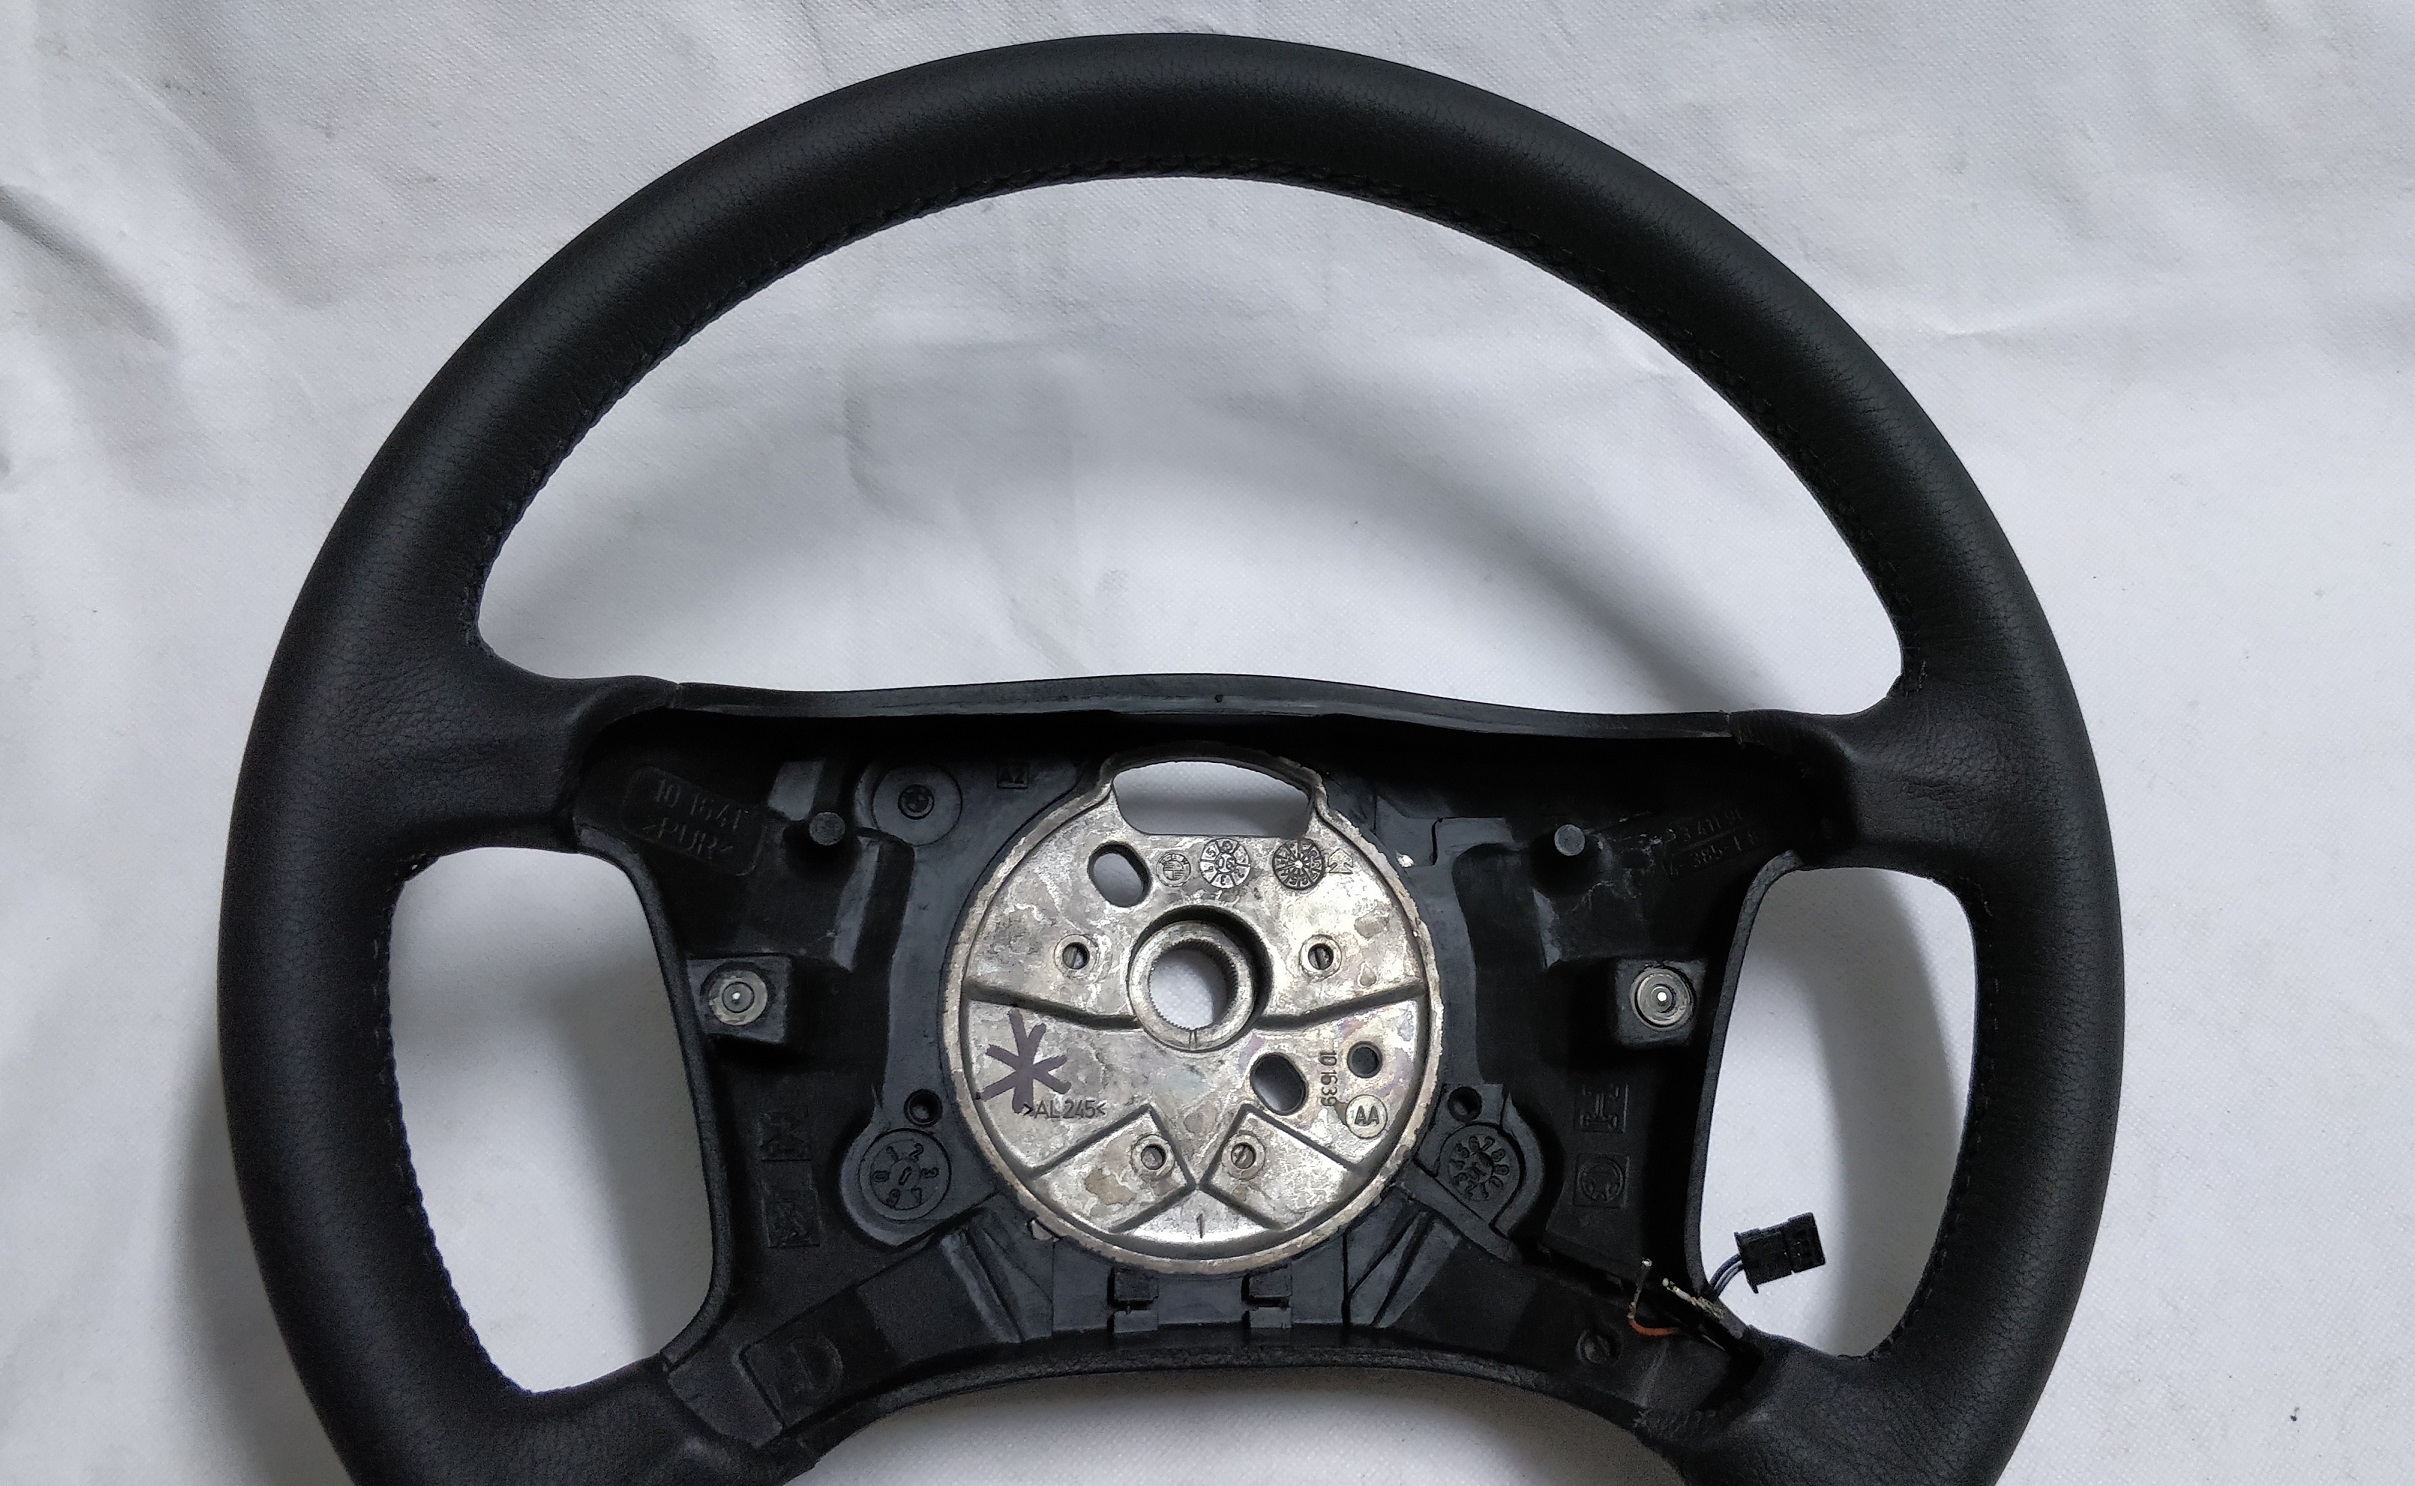 BMW steering wheel HEATED X3 E83 X5 E53 03-09 3411963